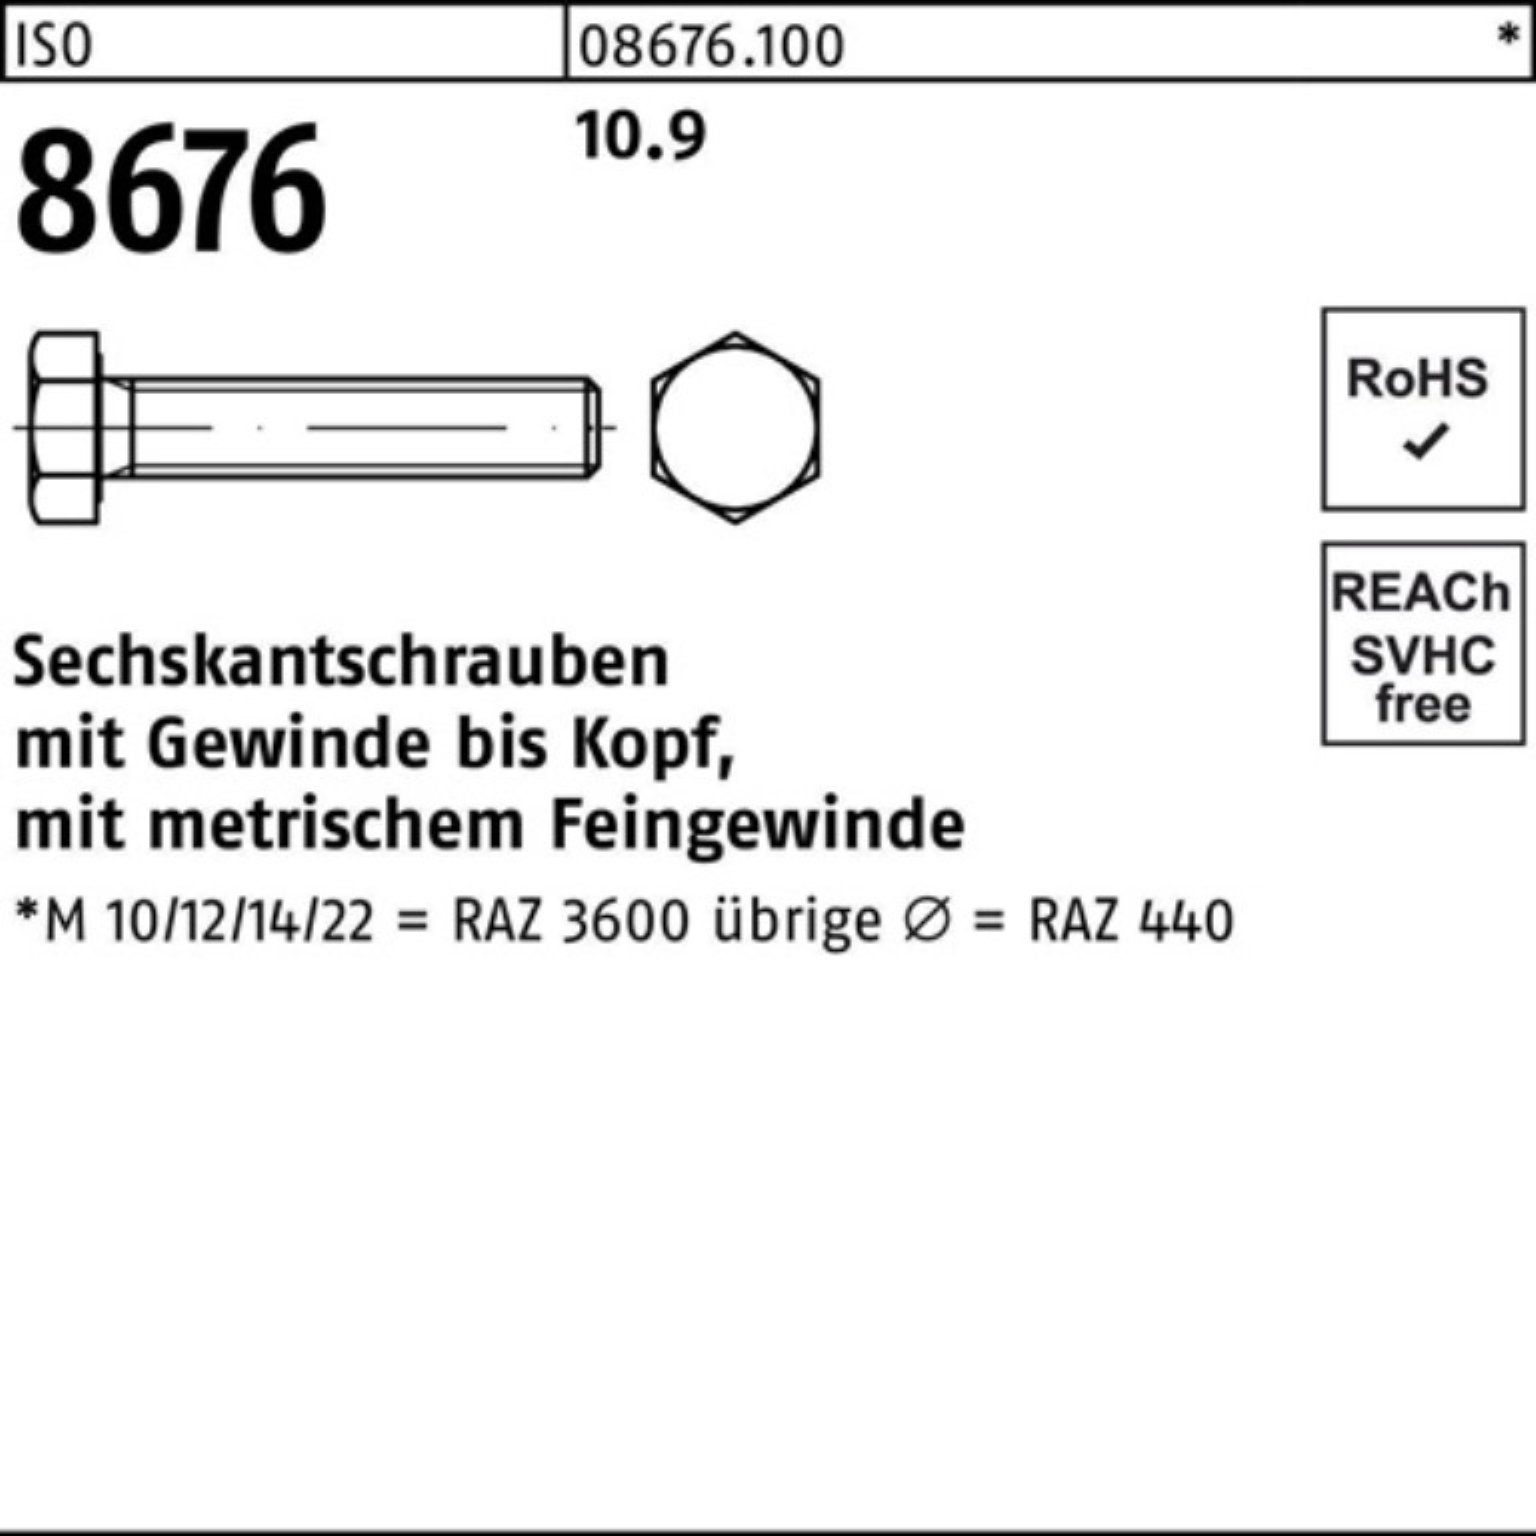 Pack Sechskantschraube 25 VG Reyher Sechskantschraube 8676 M20x2x100 Stück 10.9 100er ISO ISO